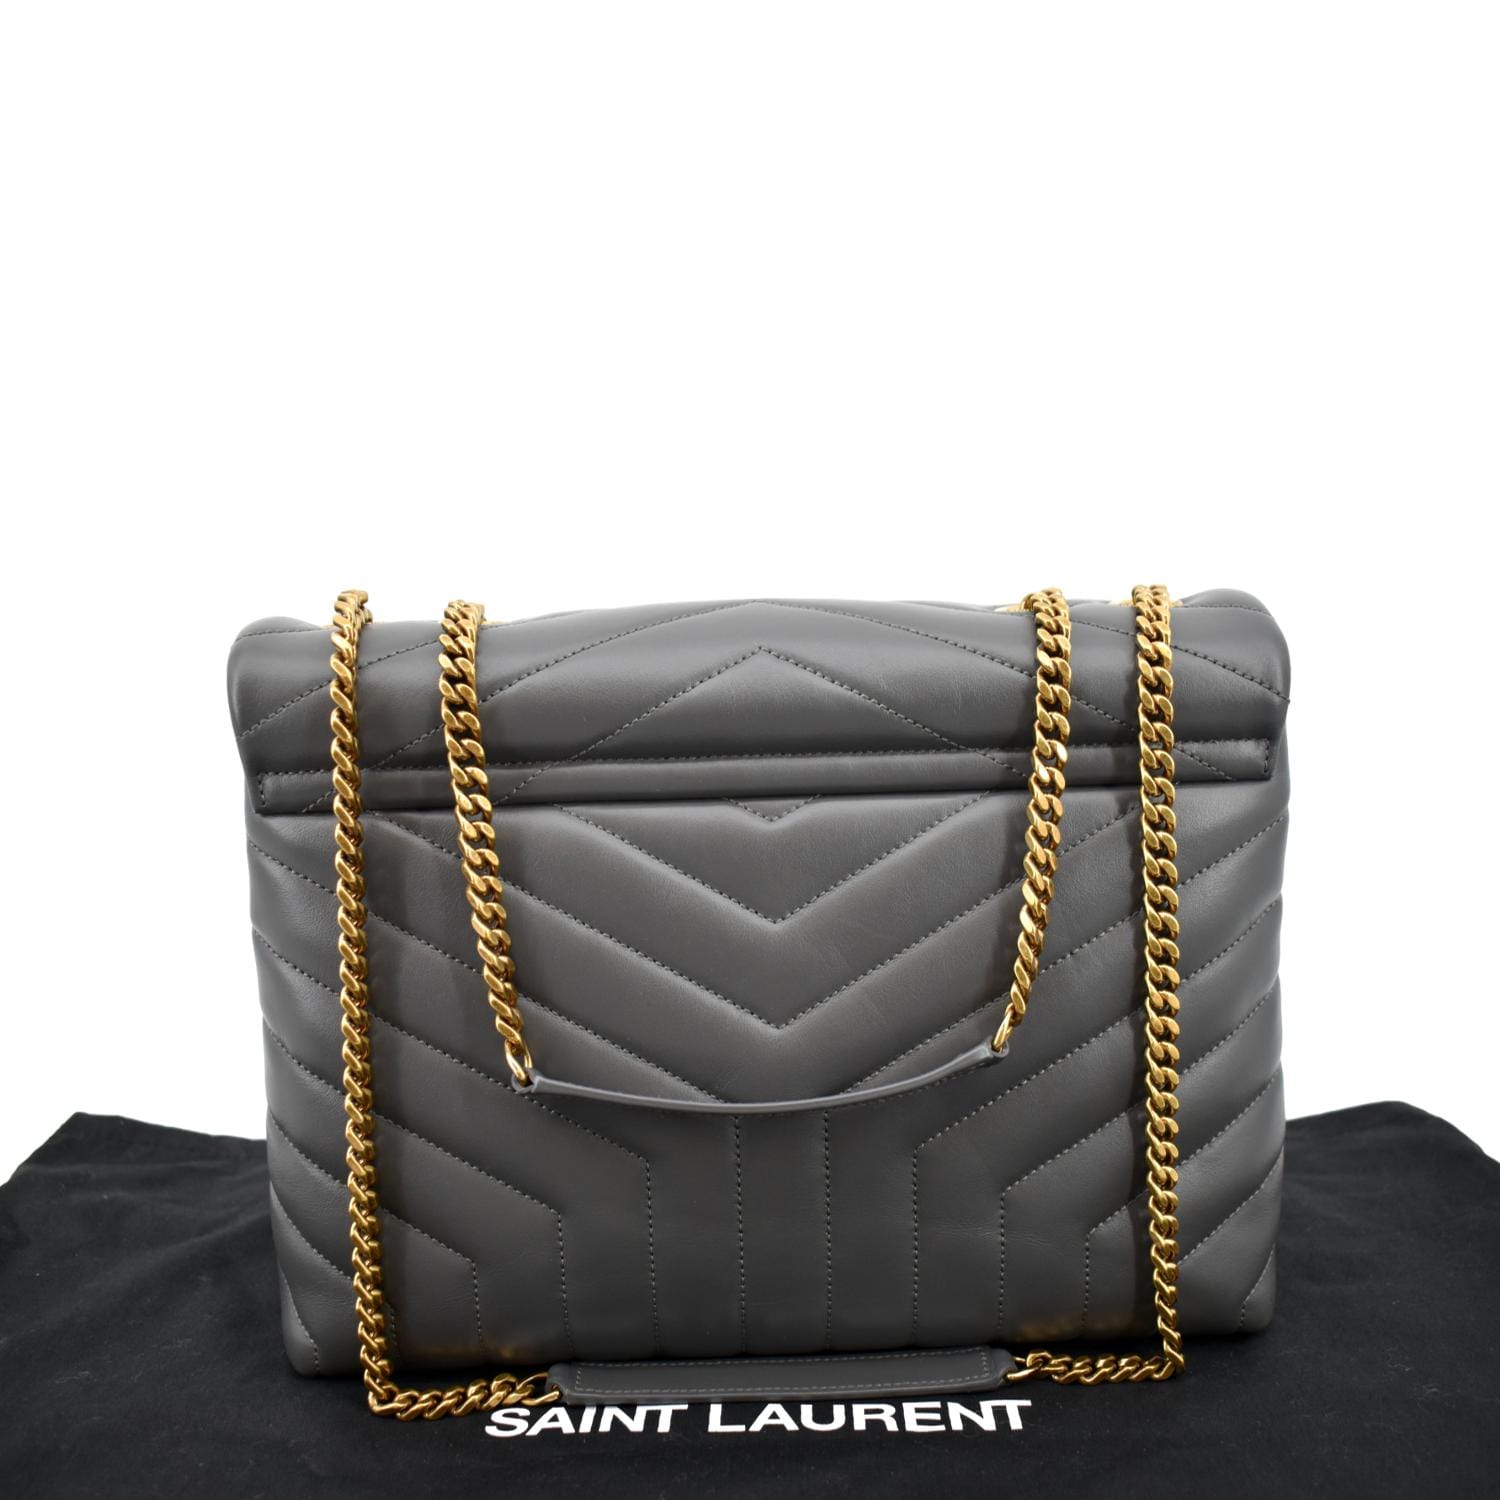 Quick Tips to Authenticate the Saint Laurent Loulou Satchel